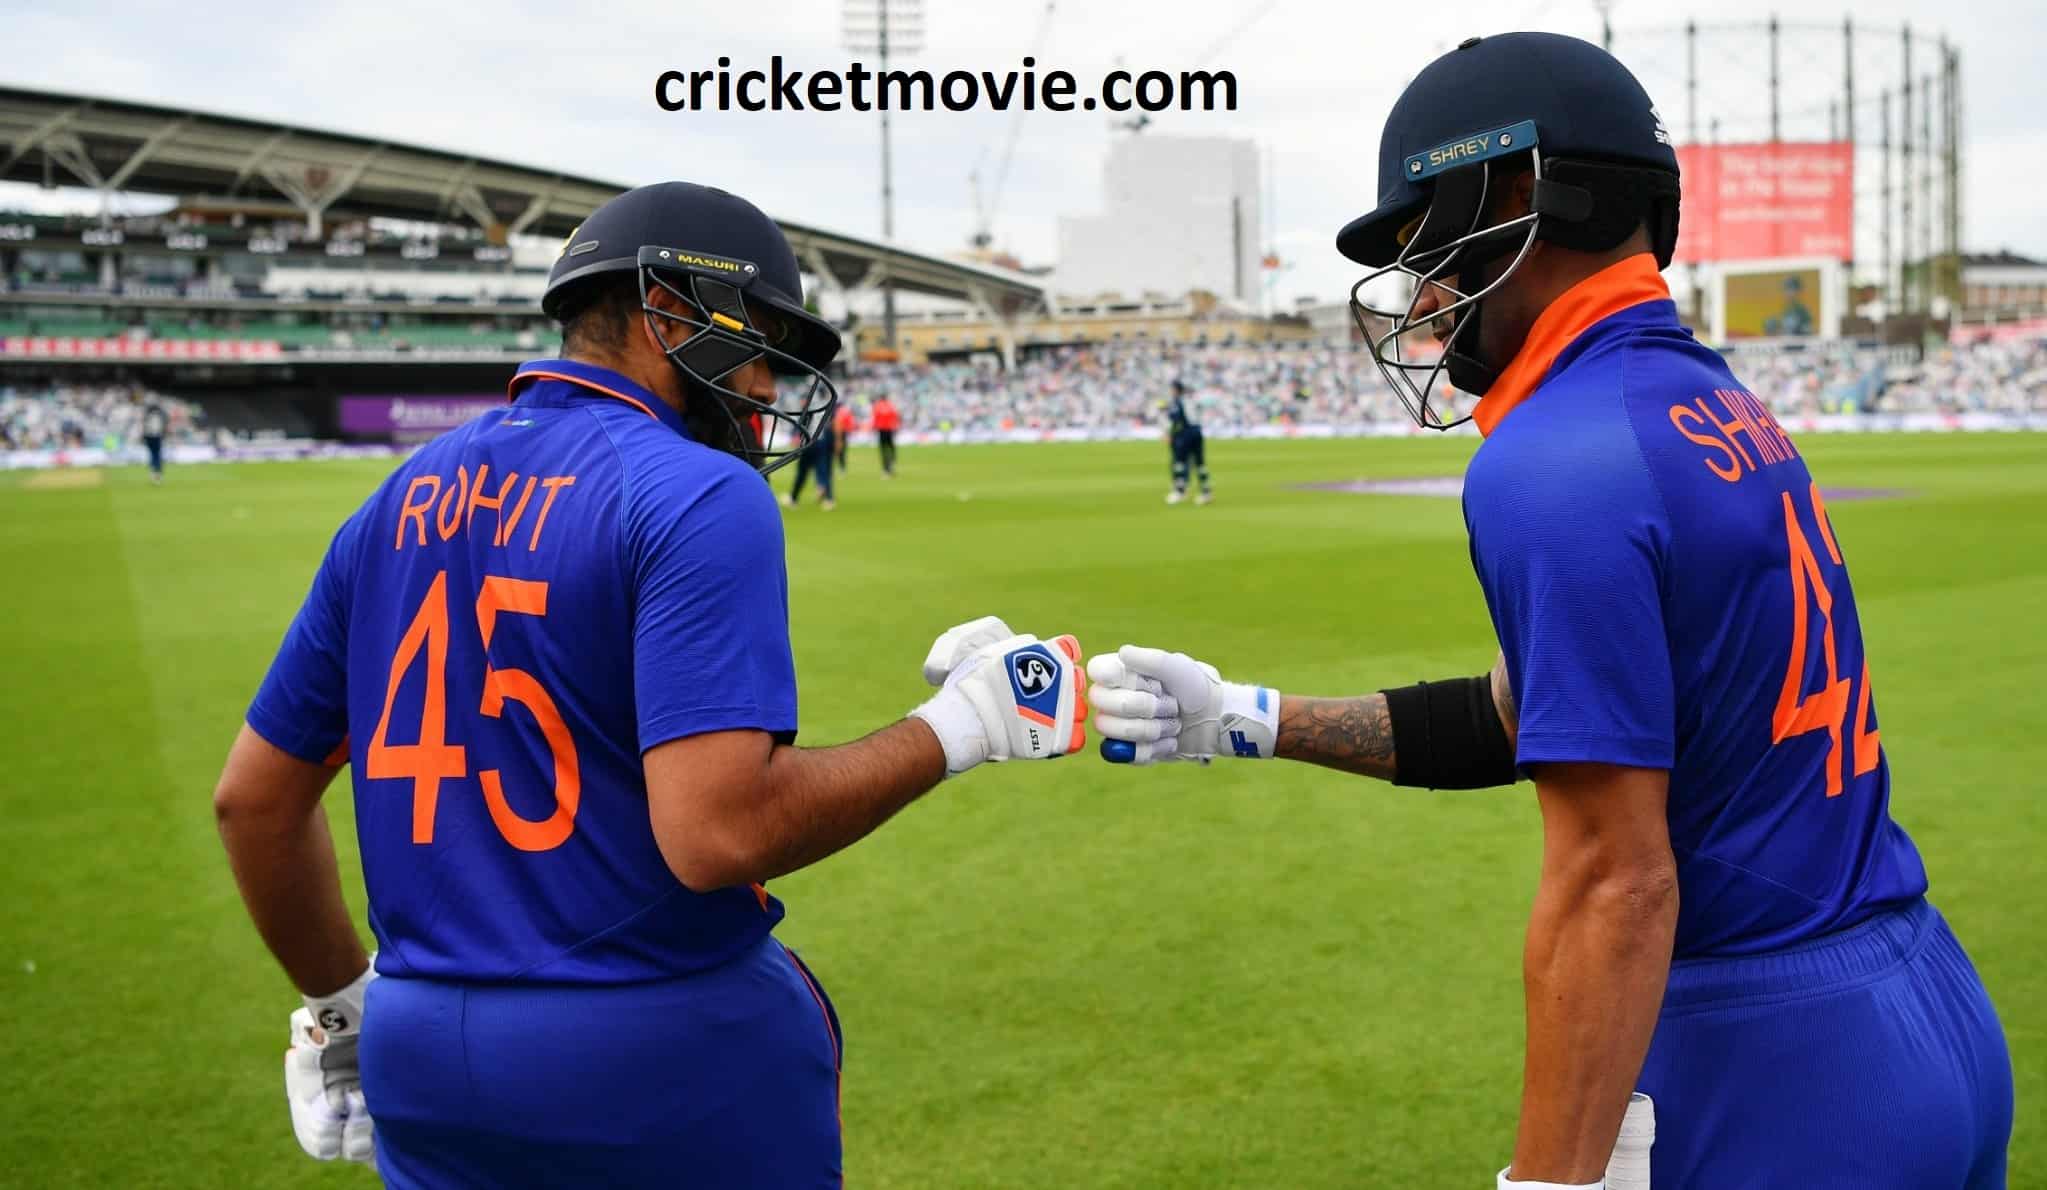 Team India won 1st ODI by 10 wickets-cricketmovie.com